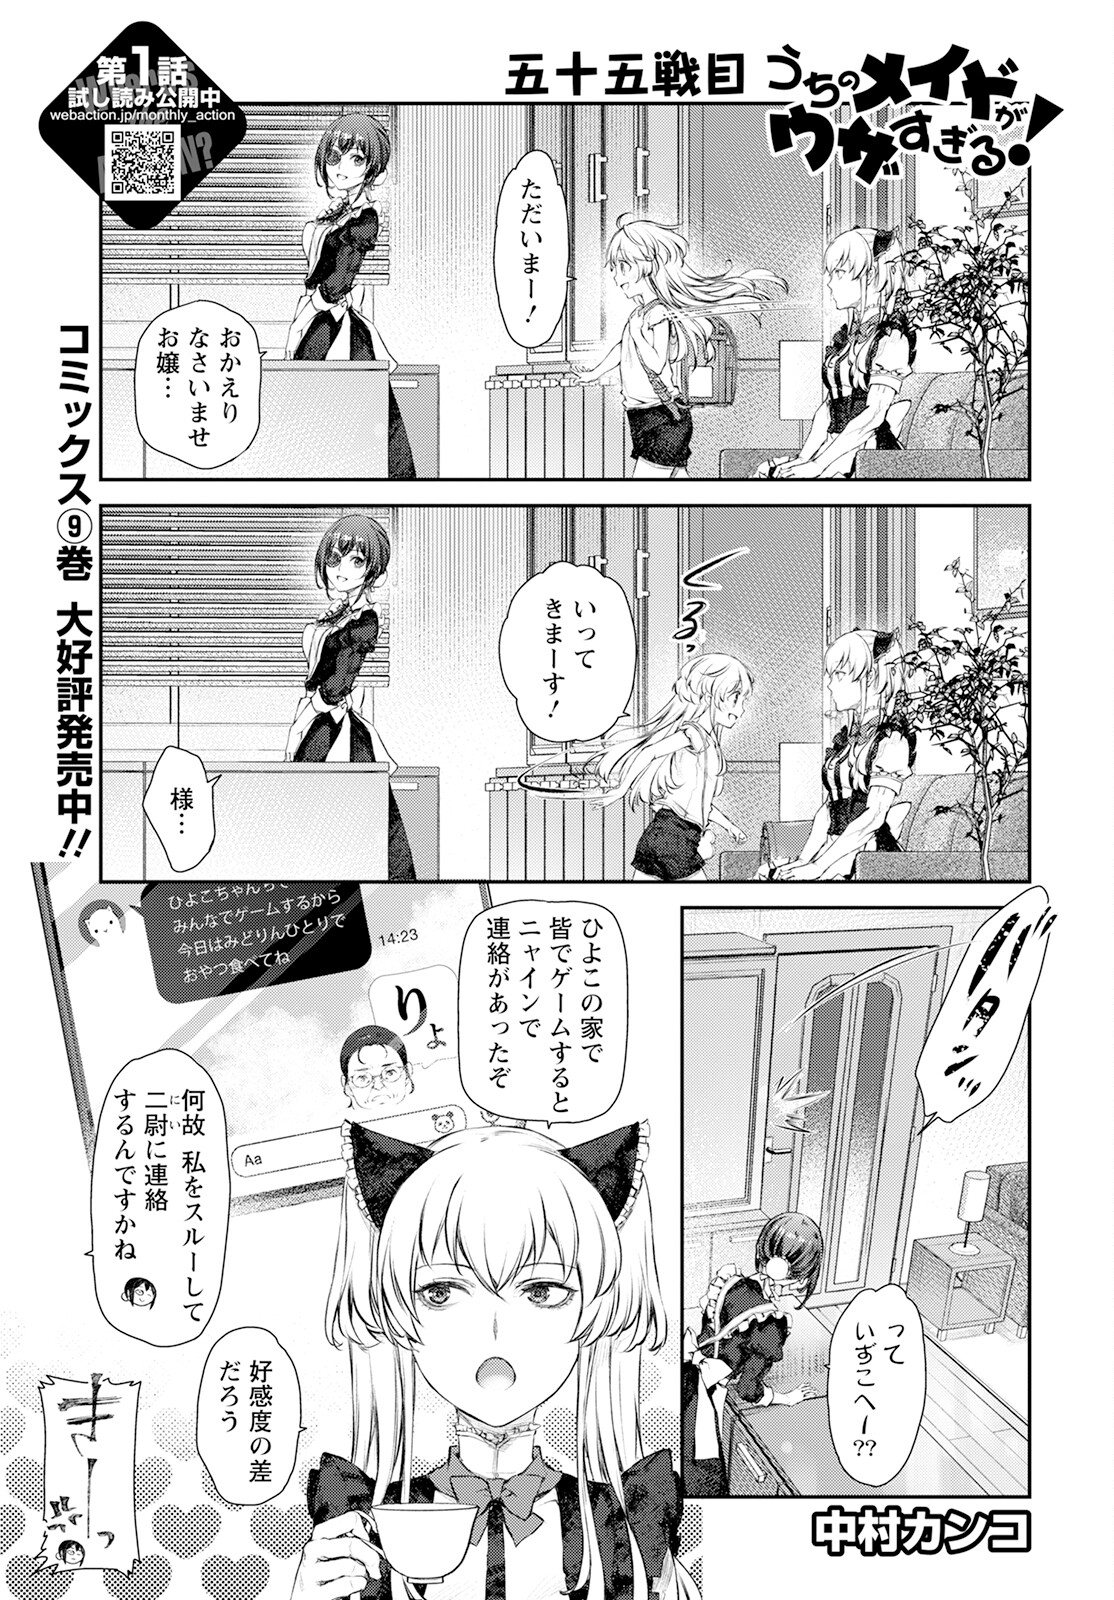 Uchi no Maid ga Uzasugiru! - Chapter 55 - Page 1